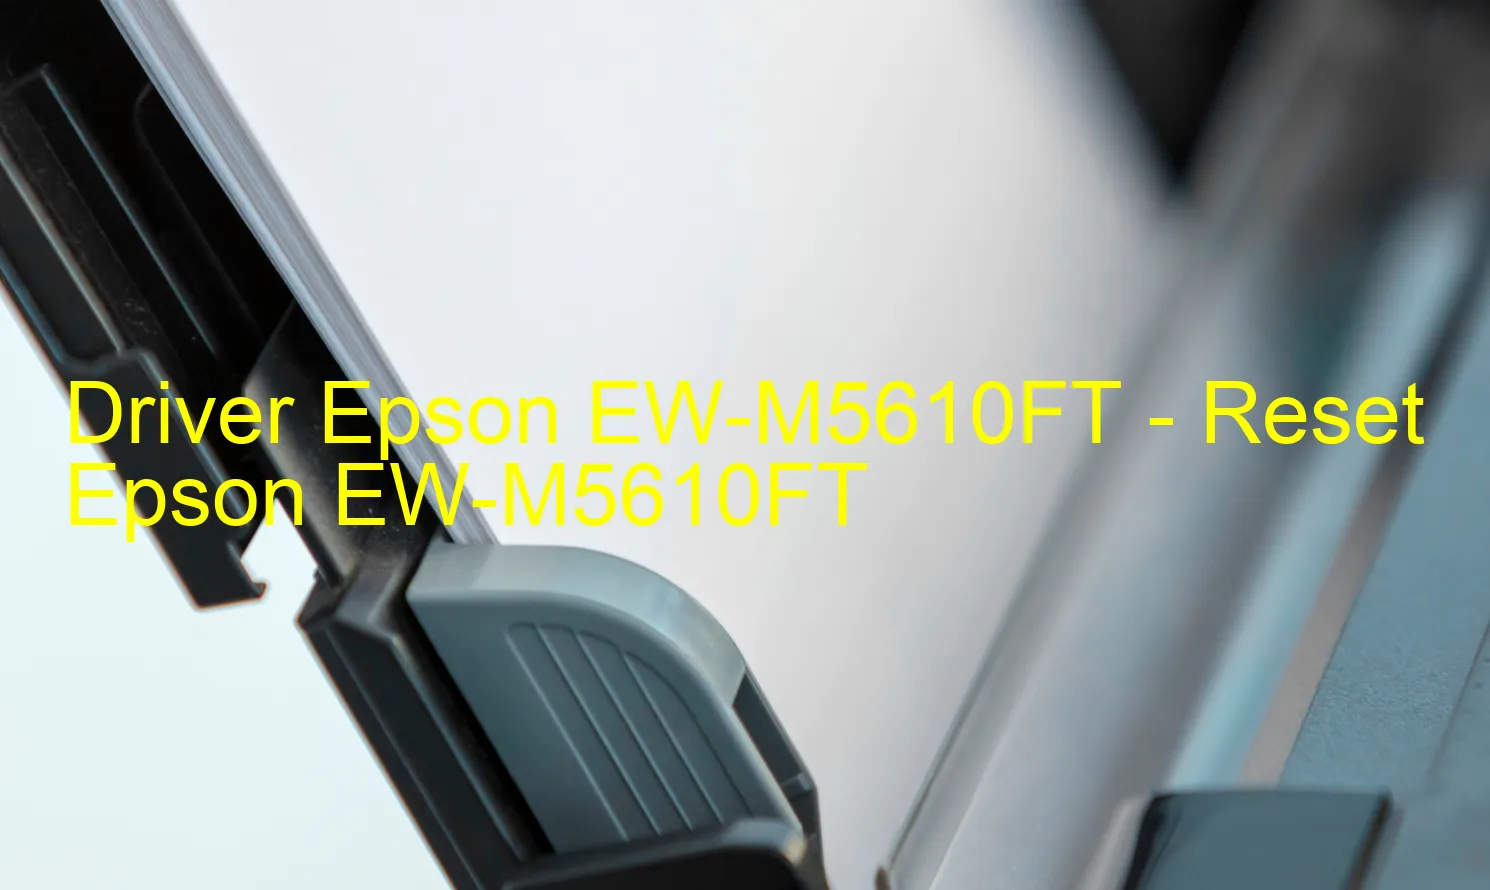 Epson EW-M5610FTのドライバー、Epson EW-M5610FTのリセットソフトウェア